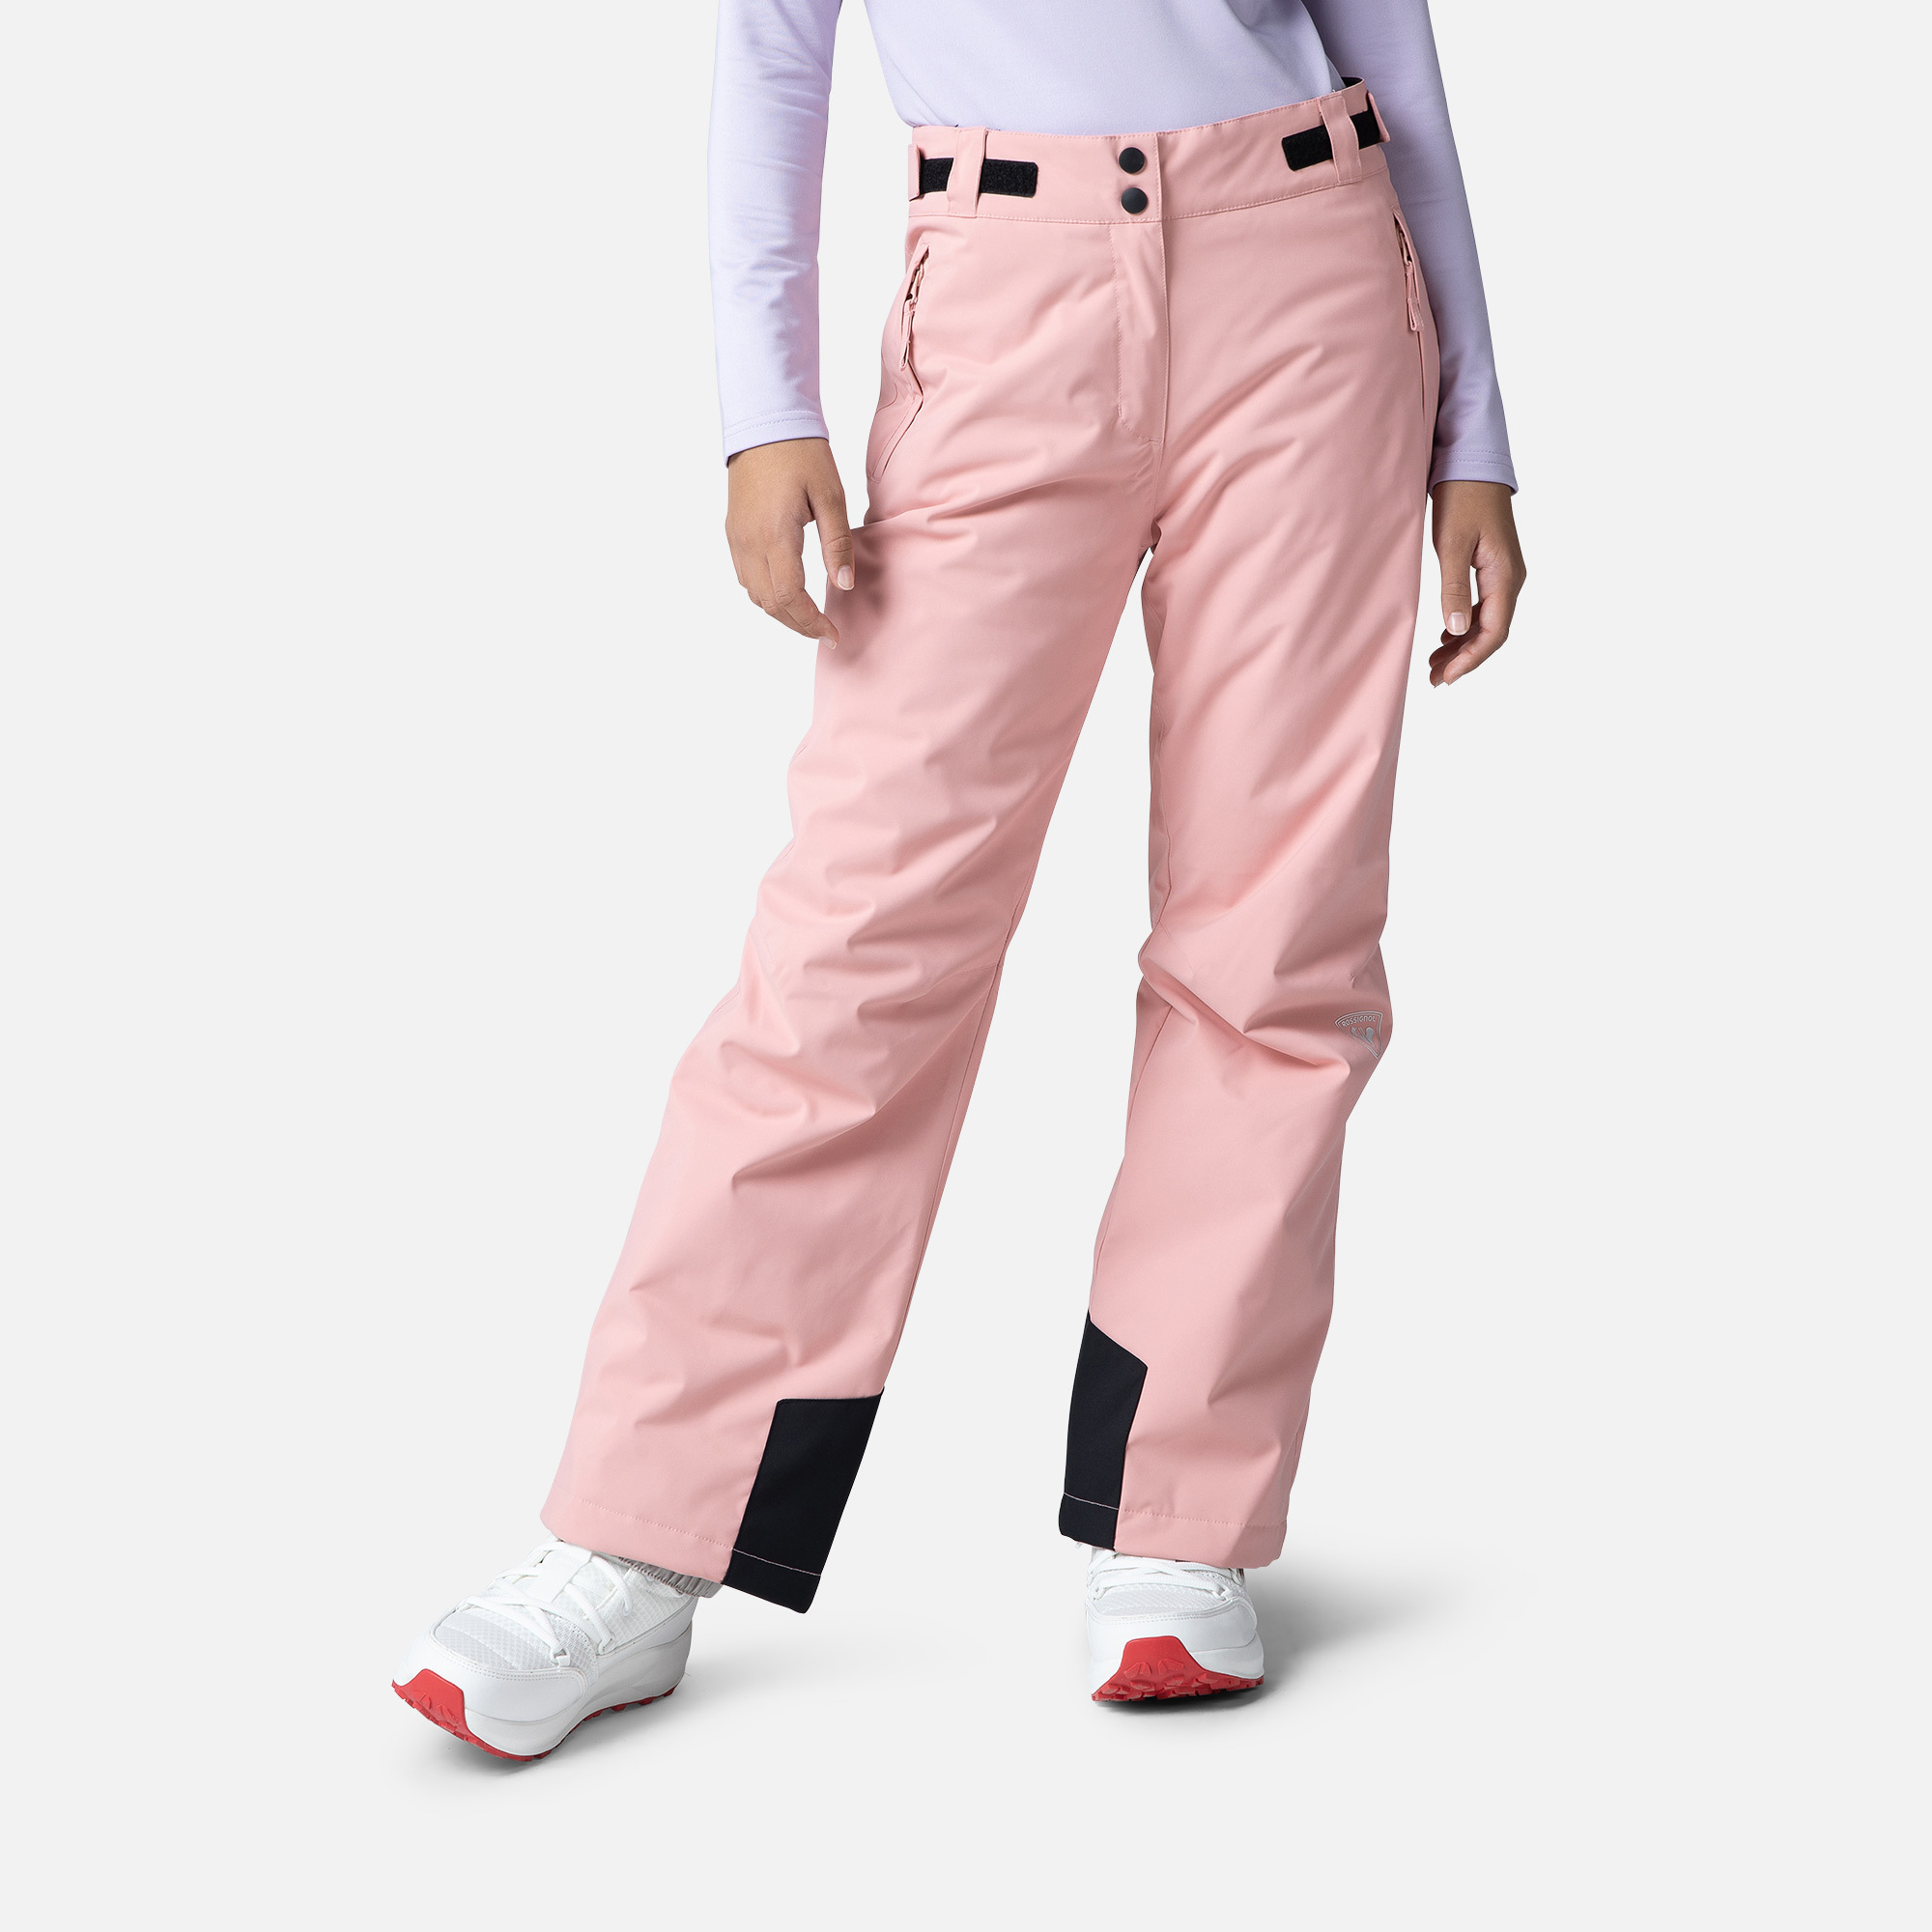 Rossignol Girl's Rooster Sweat Pants, Sweat pants Junior, Pink Fushia